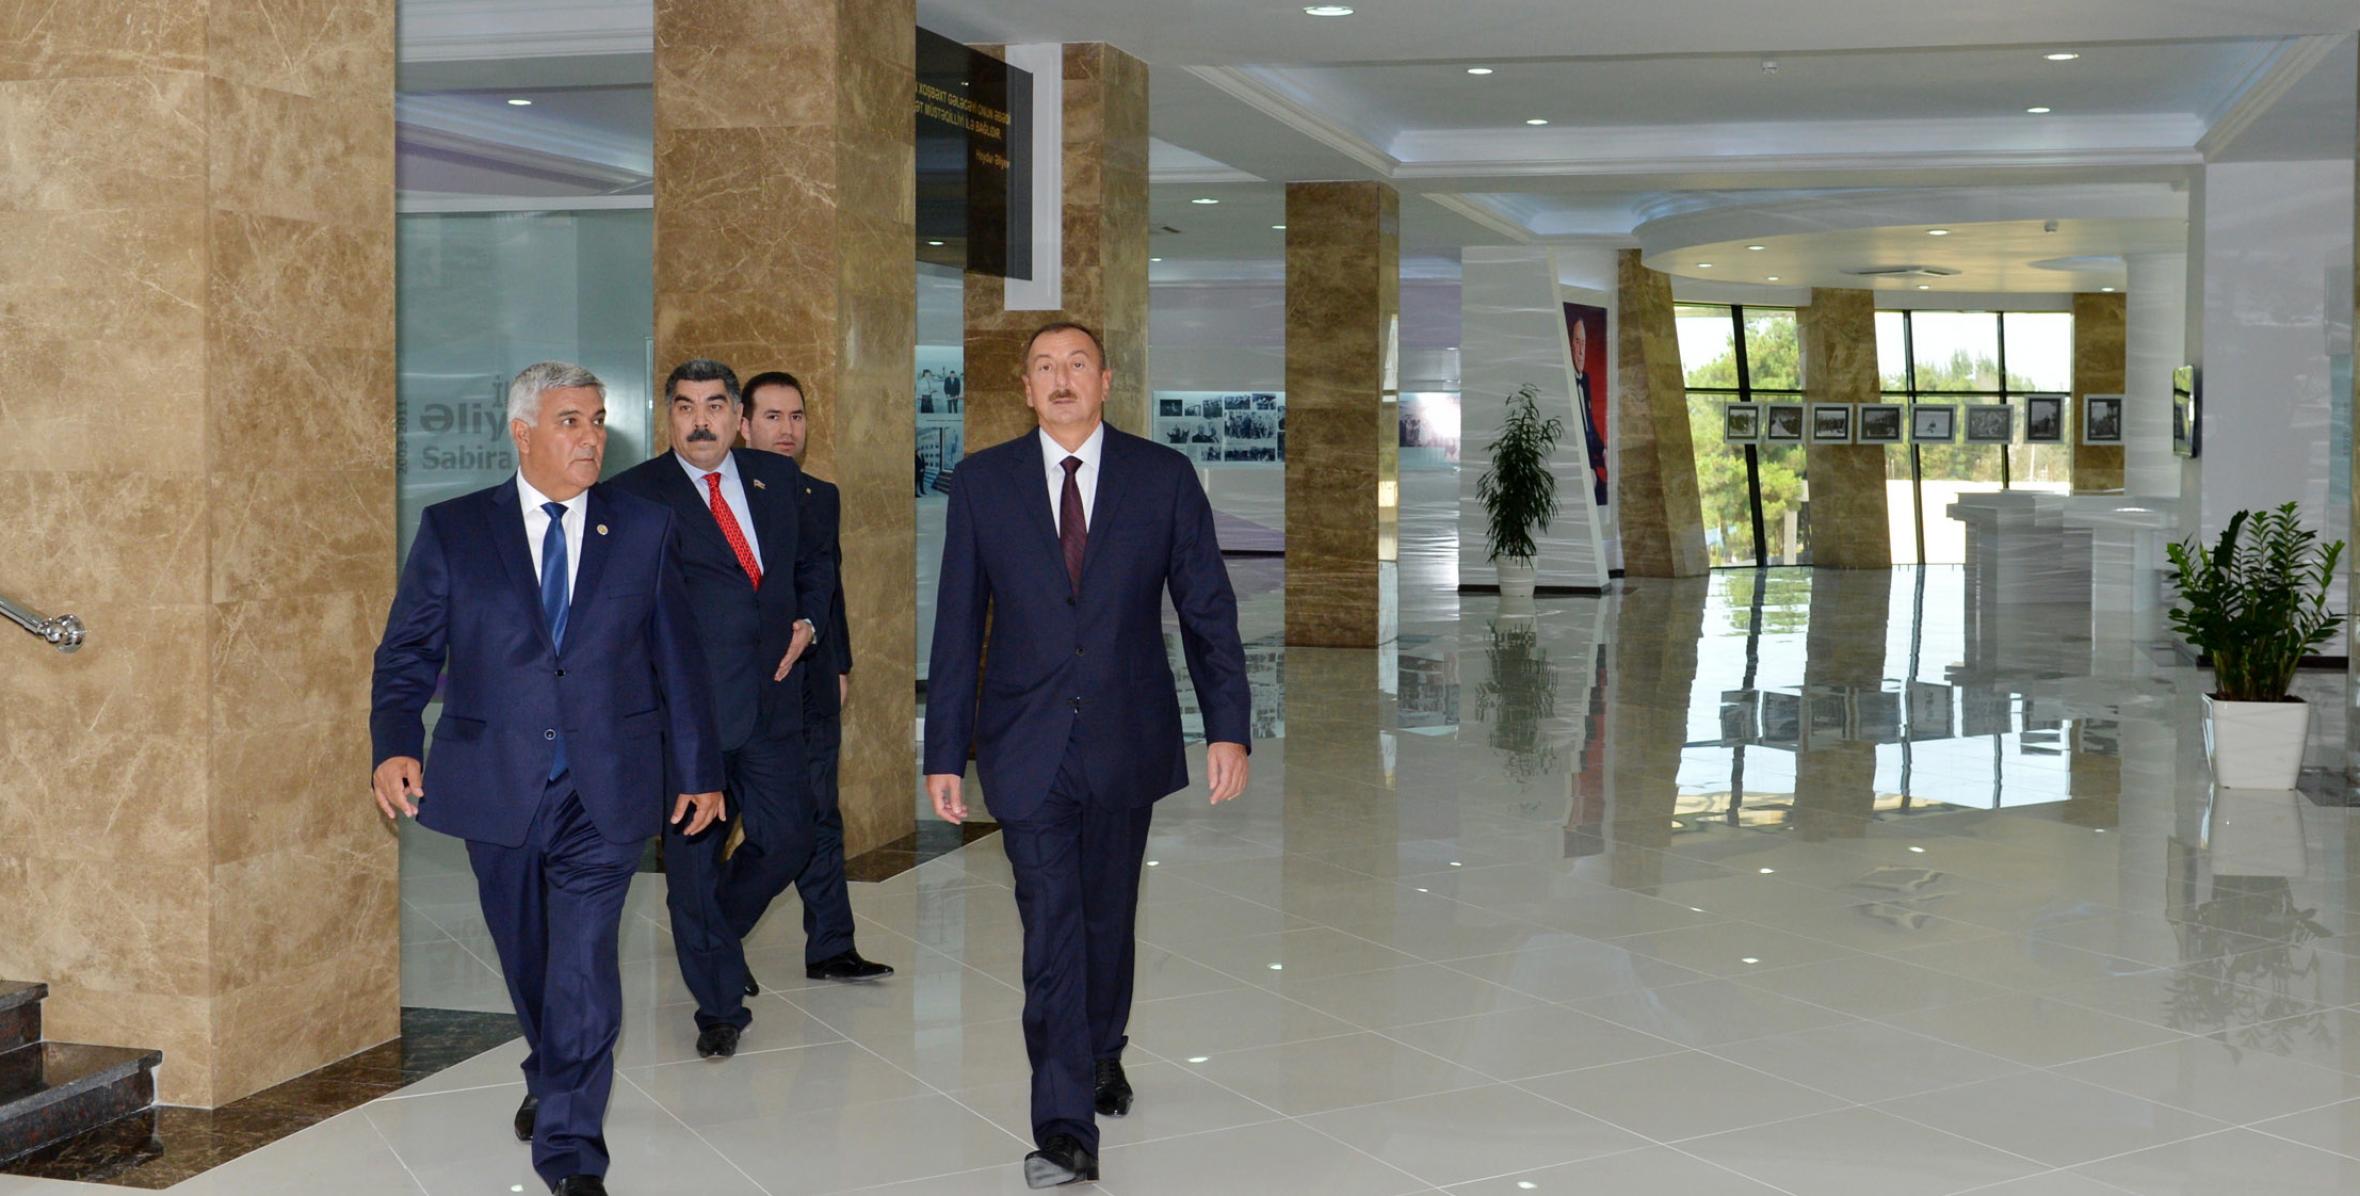 Ilham Aliyev attended the opening of the Heydar Aliyev Center